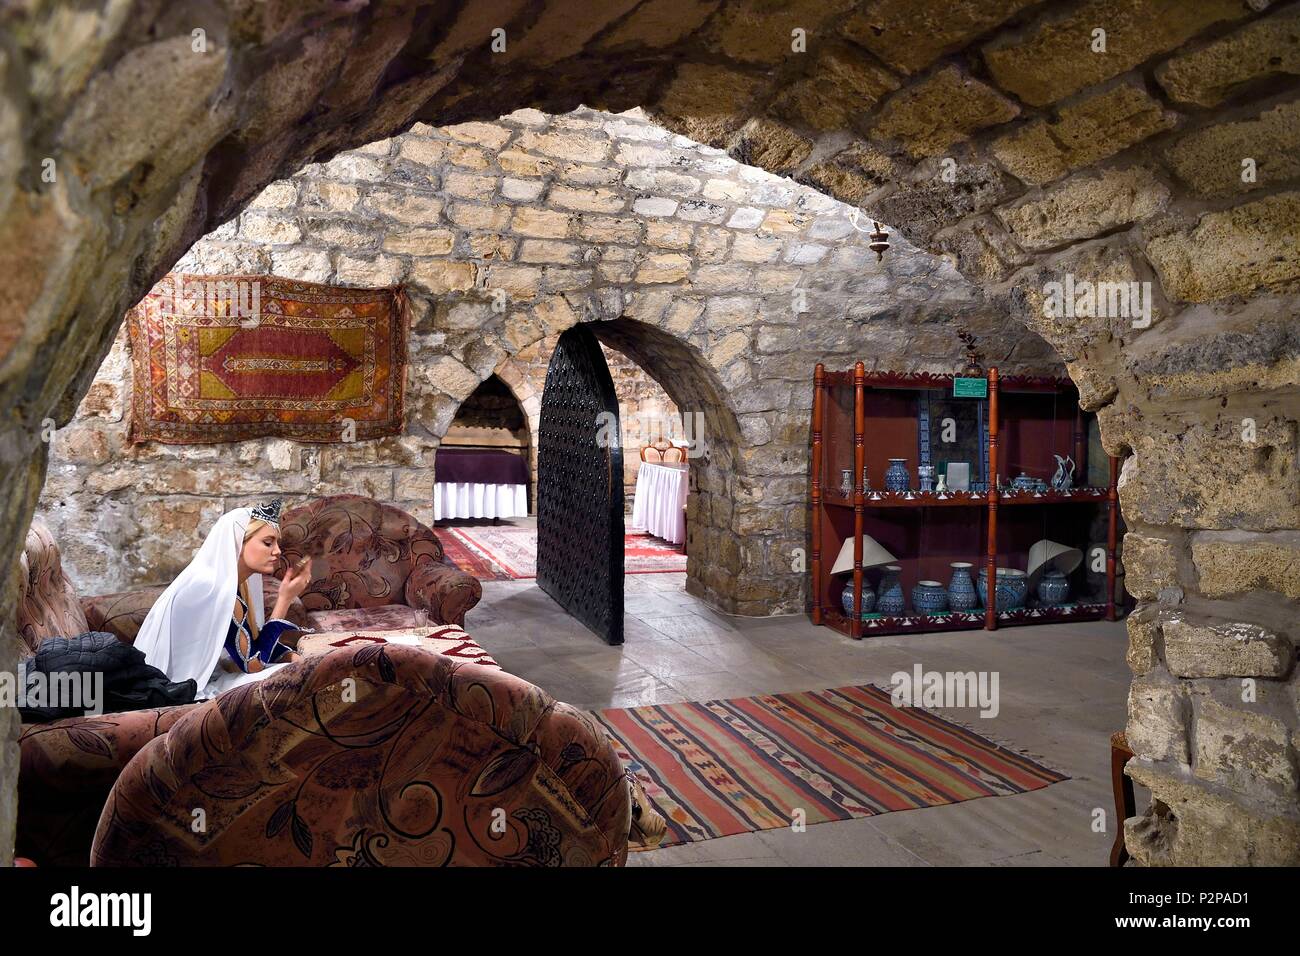 Azerbaijan, Baku, Old City, listed as World heritage by UNESCO, Karvansara restaurant, former 15th century caravanserai converted into a restaurant Stock Photo